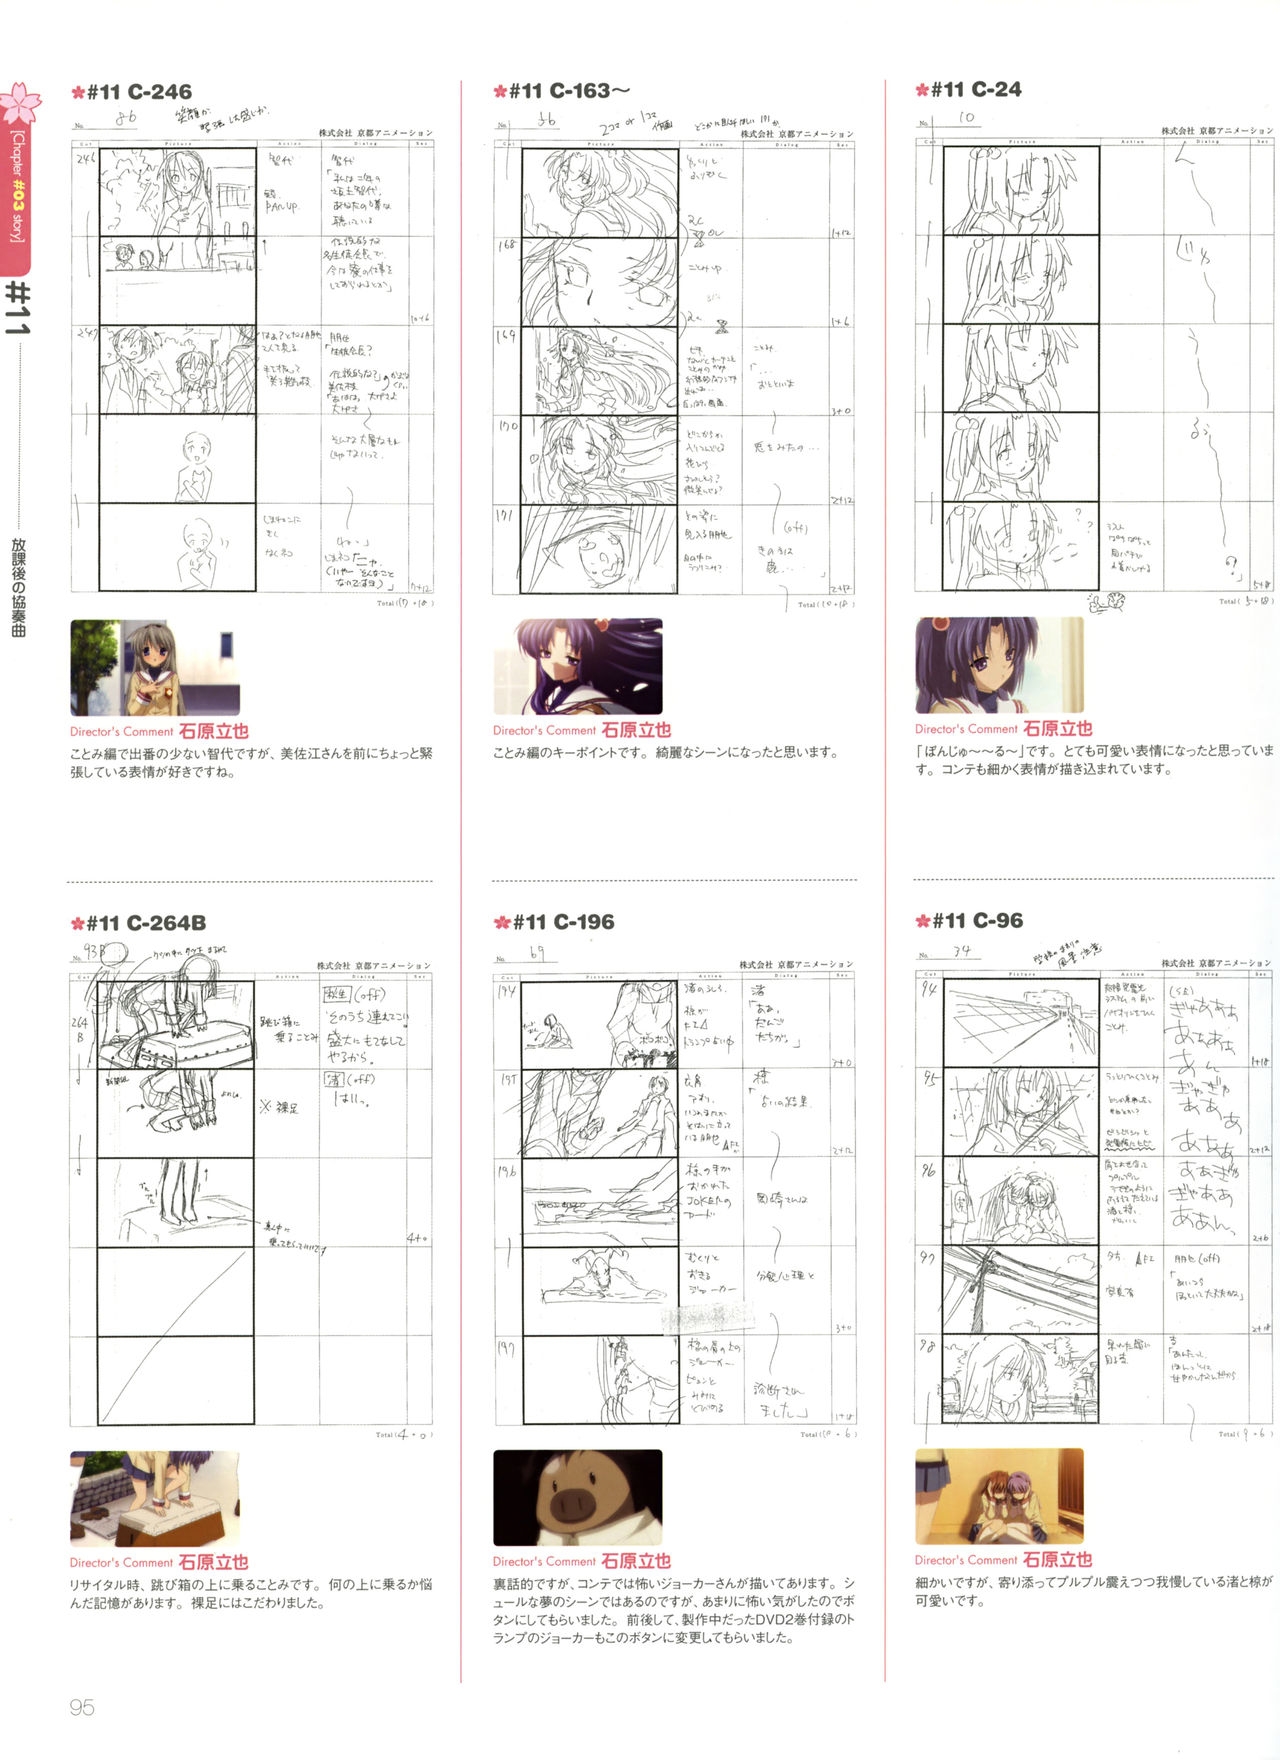 Clannad TV Animation Visual Fan Book 98